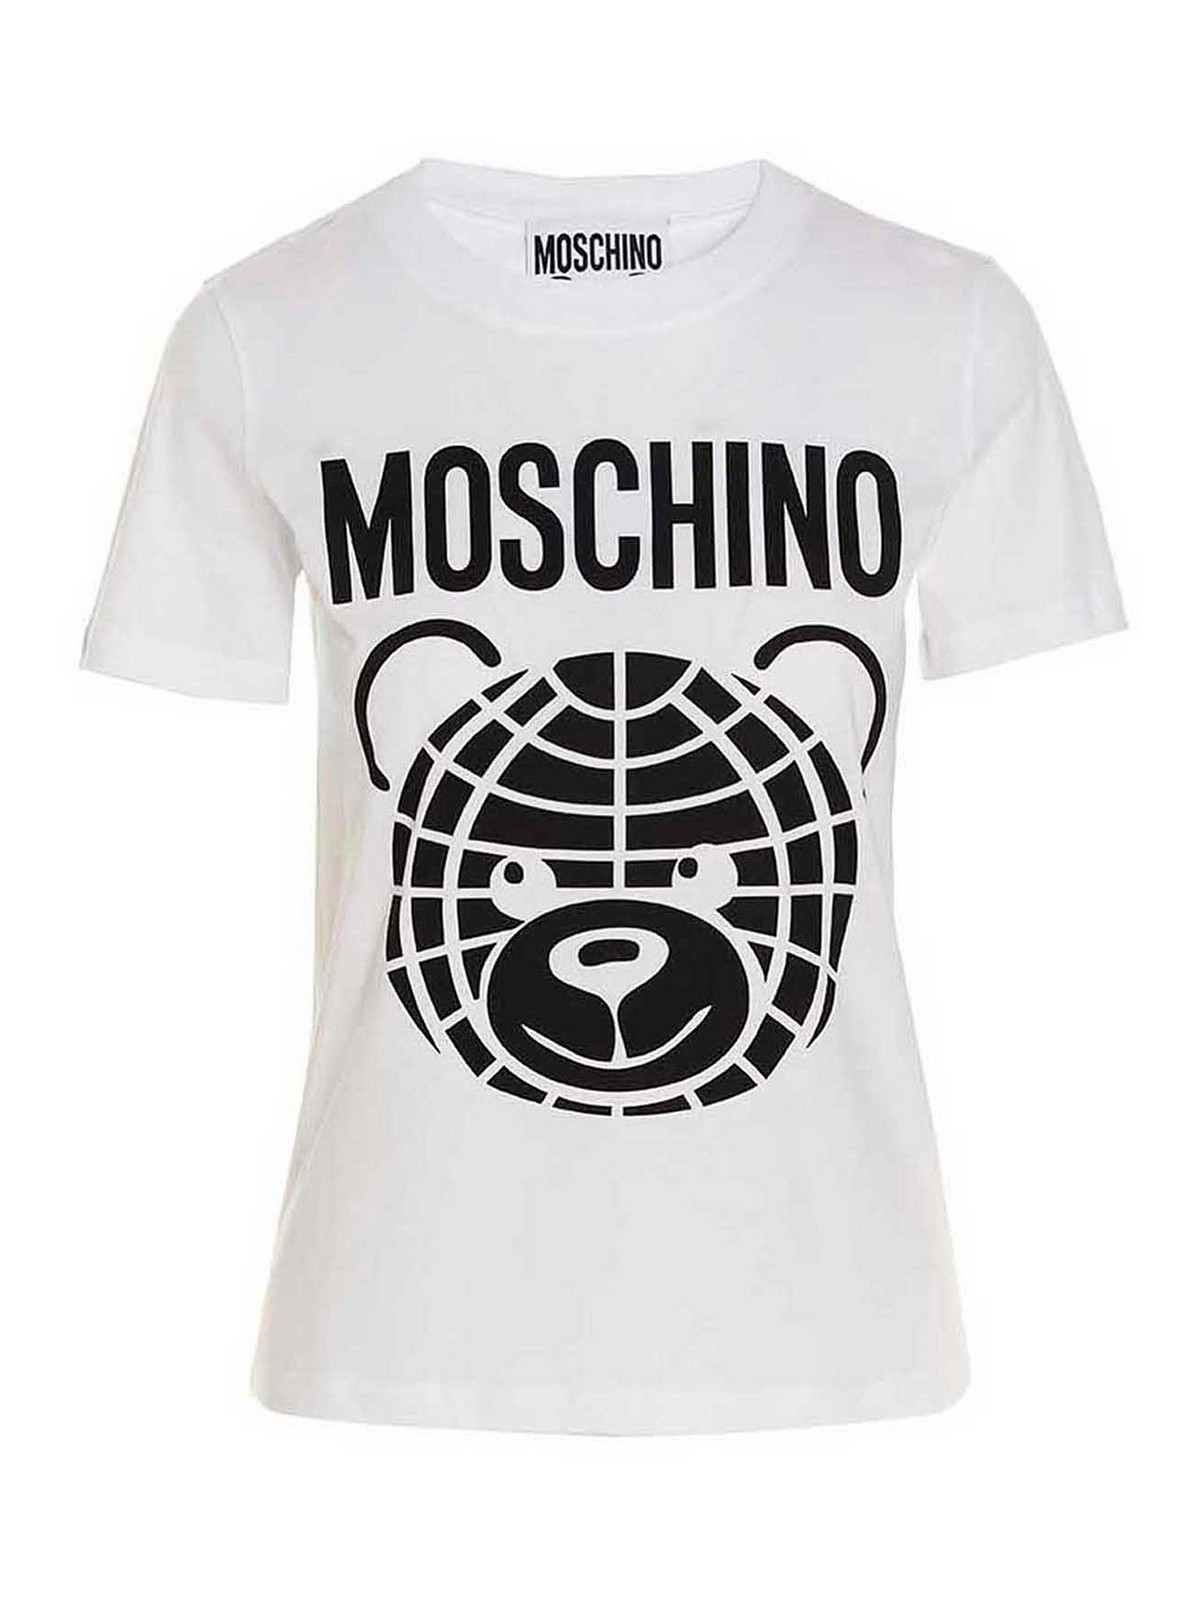 Moschino Teddy Bear T Shirt, Moschino T-Shirt For Men, For Women, Unisex  T-shirt, This Is Not